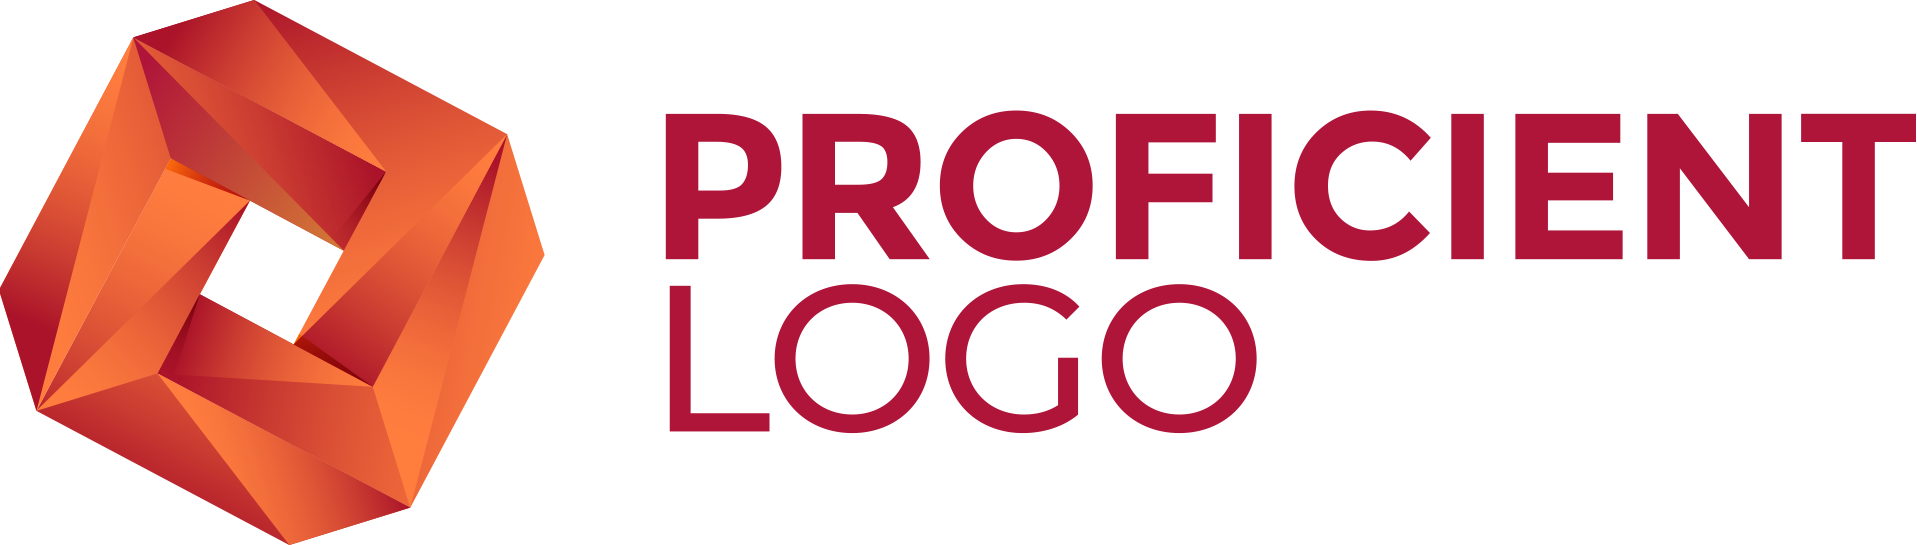 Proficient Logos